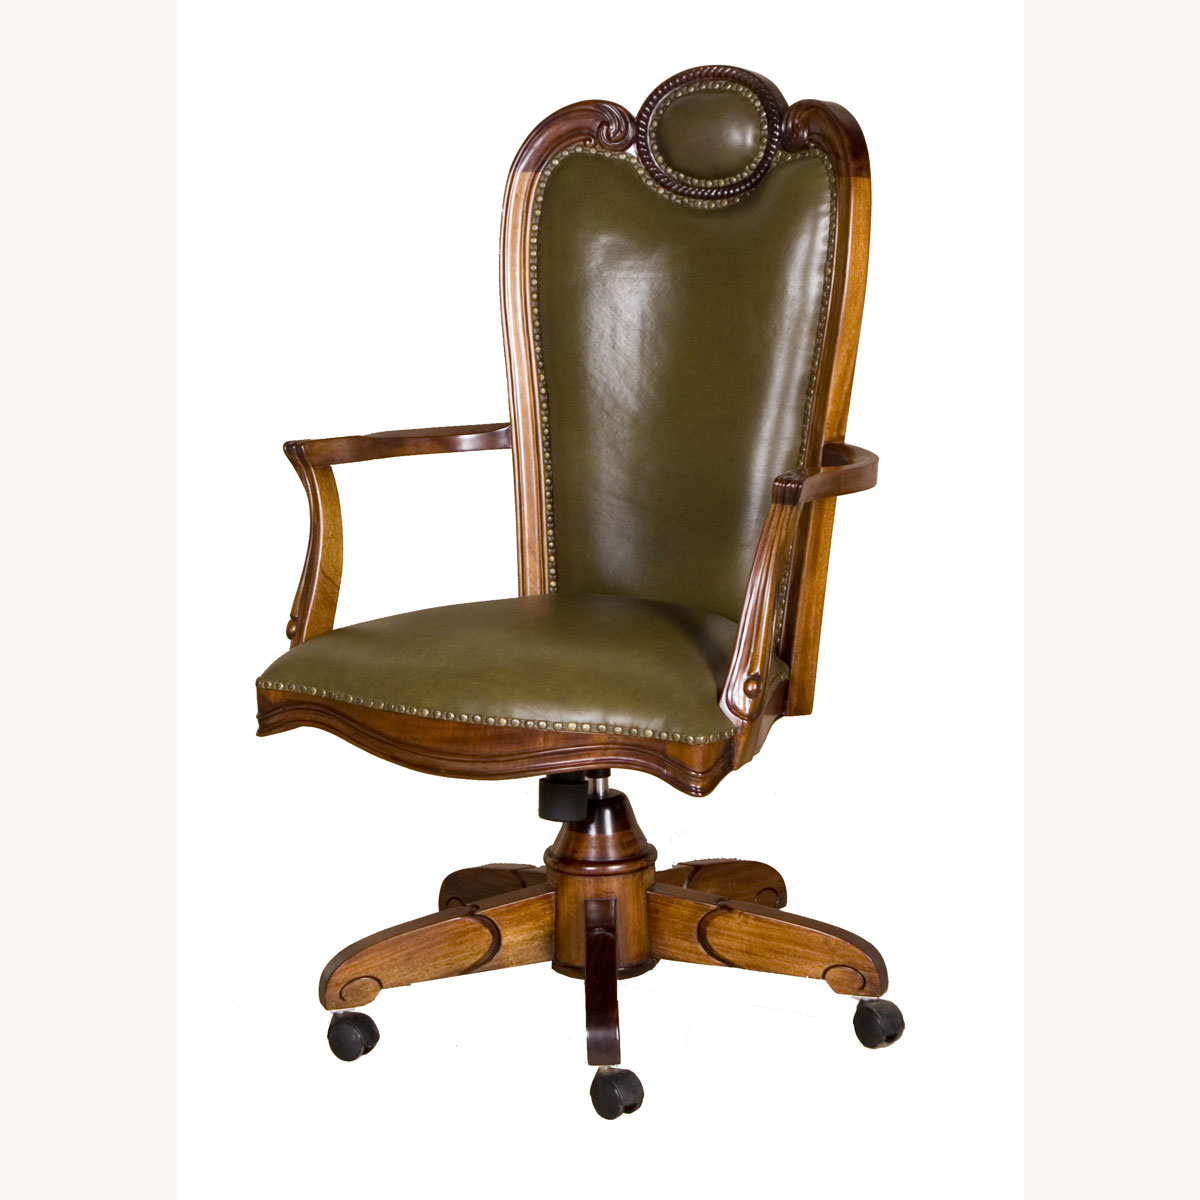 Regency Office Chair - Hampshire Barn Interiors - Regency Office Chair -